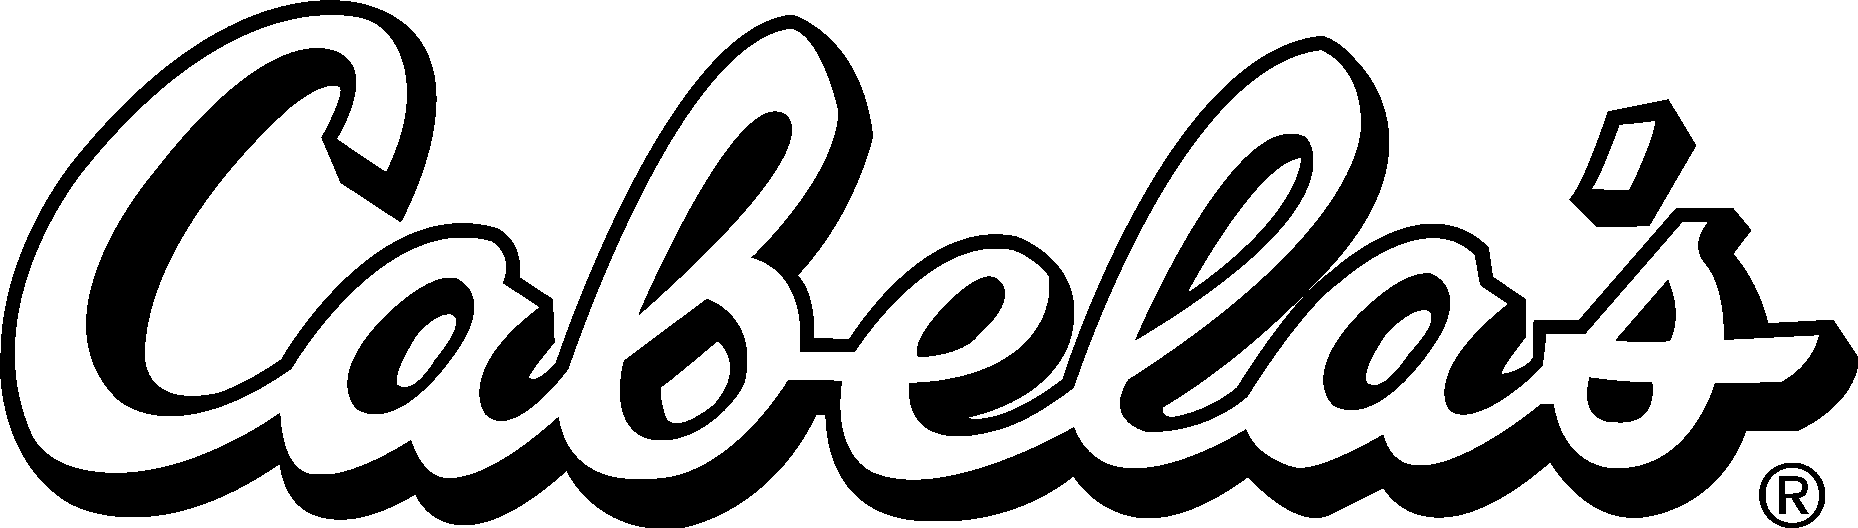 Cabela’s old Logo Vector